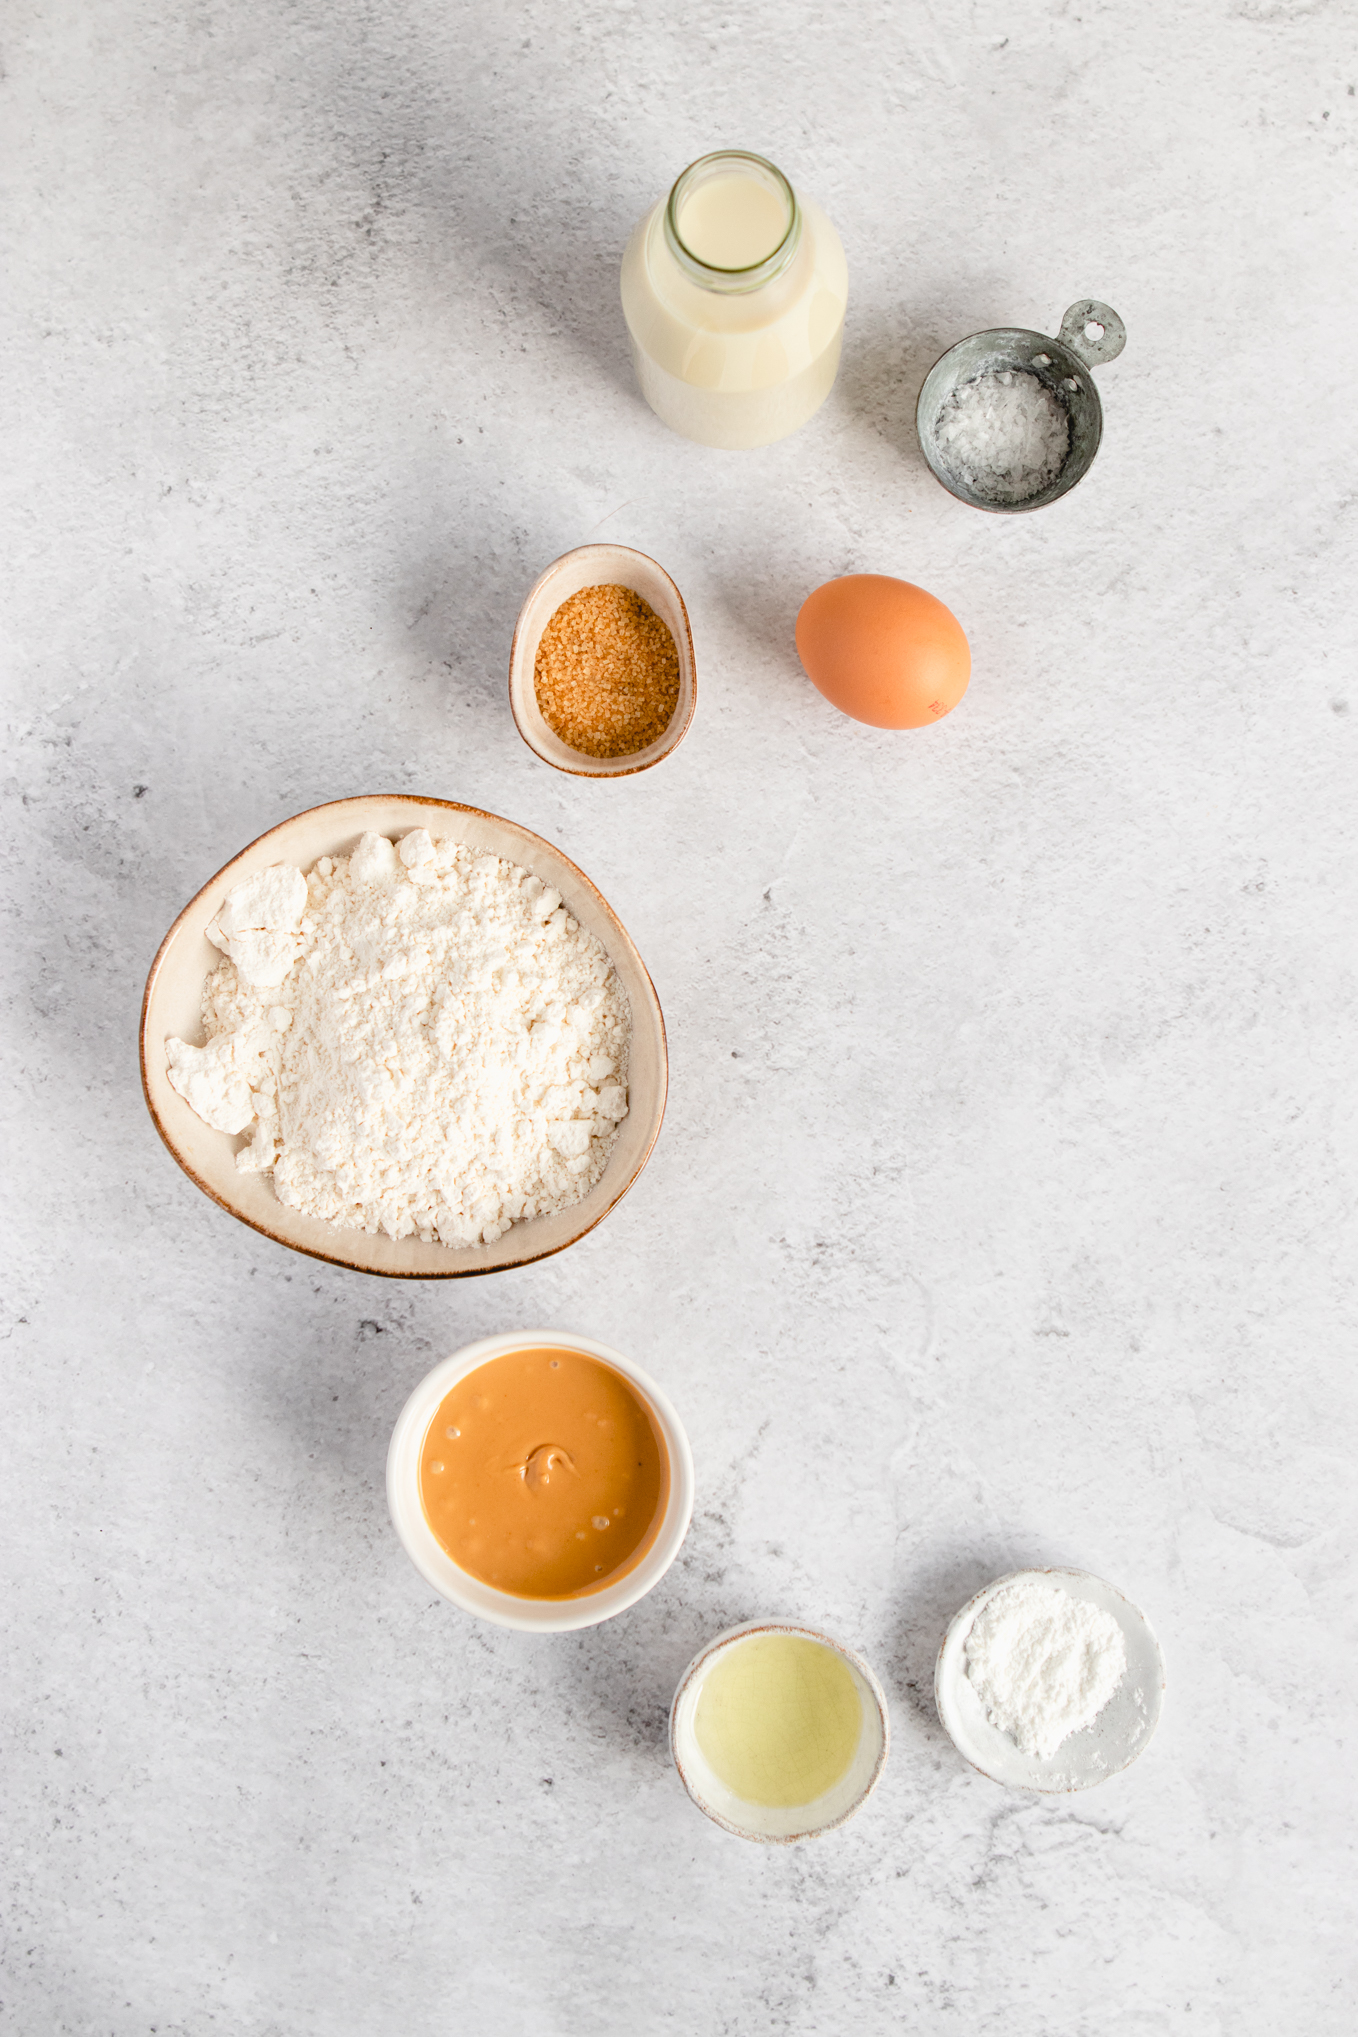 bowls of ingredients- flour, peanut butter, egg